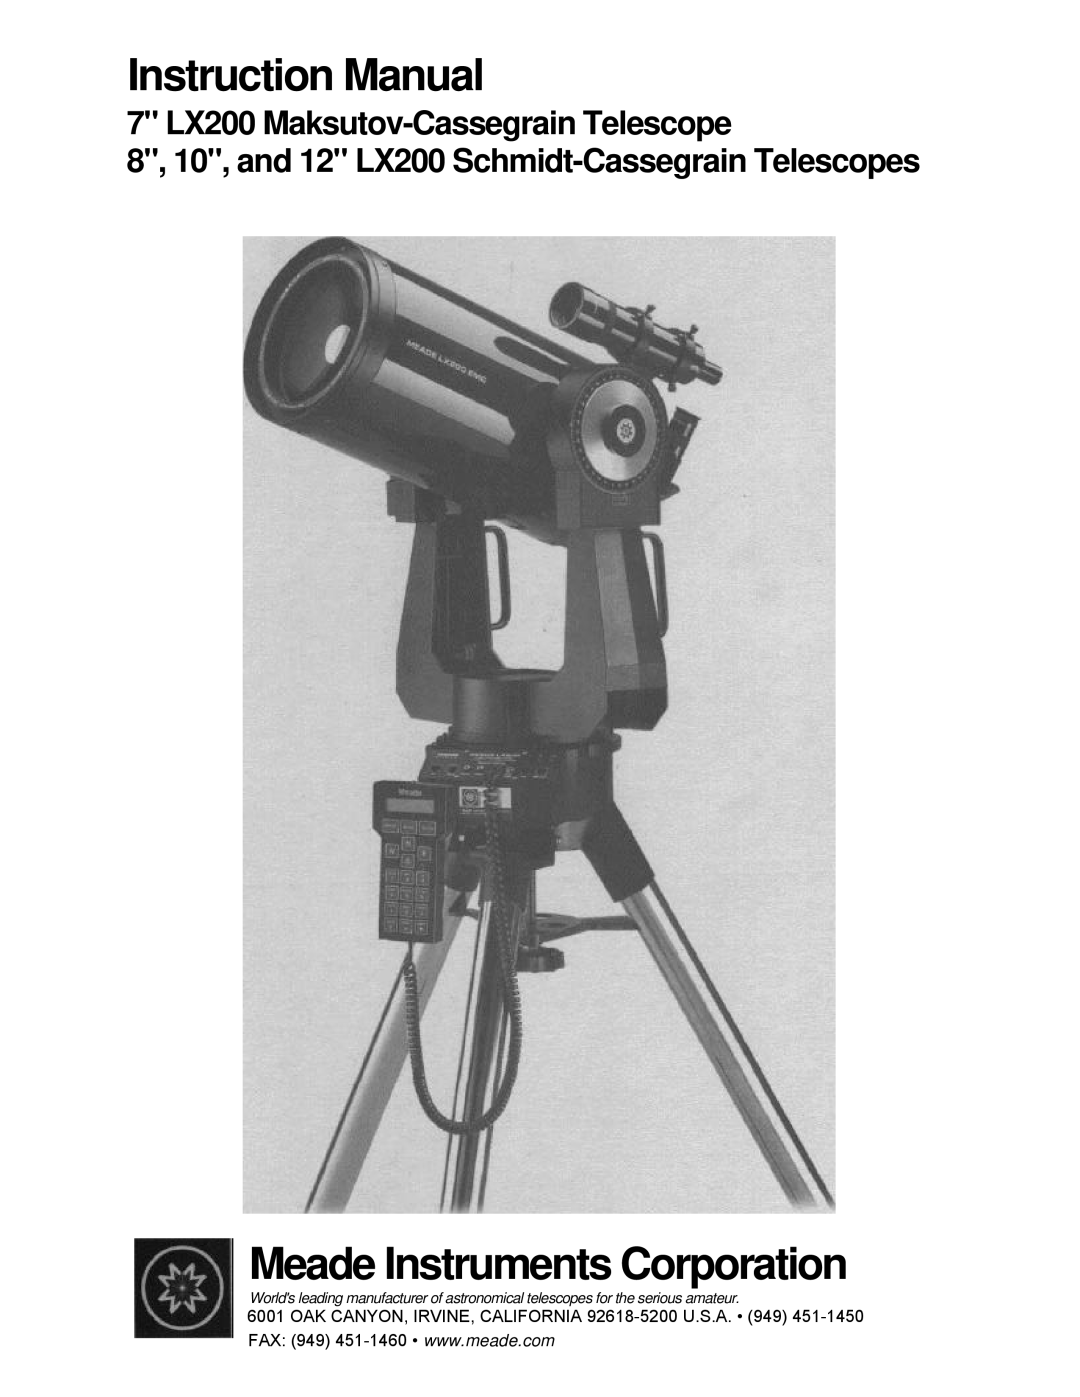 Leisure Time instruction manual 7 LX200 Maksutov-CassegrainTelescope, 8, 10, and 12 LX200 Schmidt-CassegrainTelescopes 